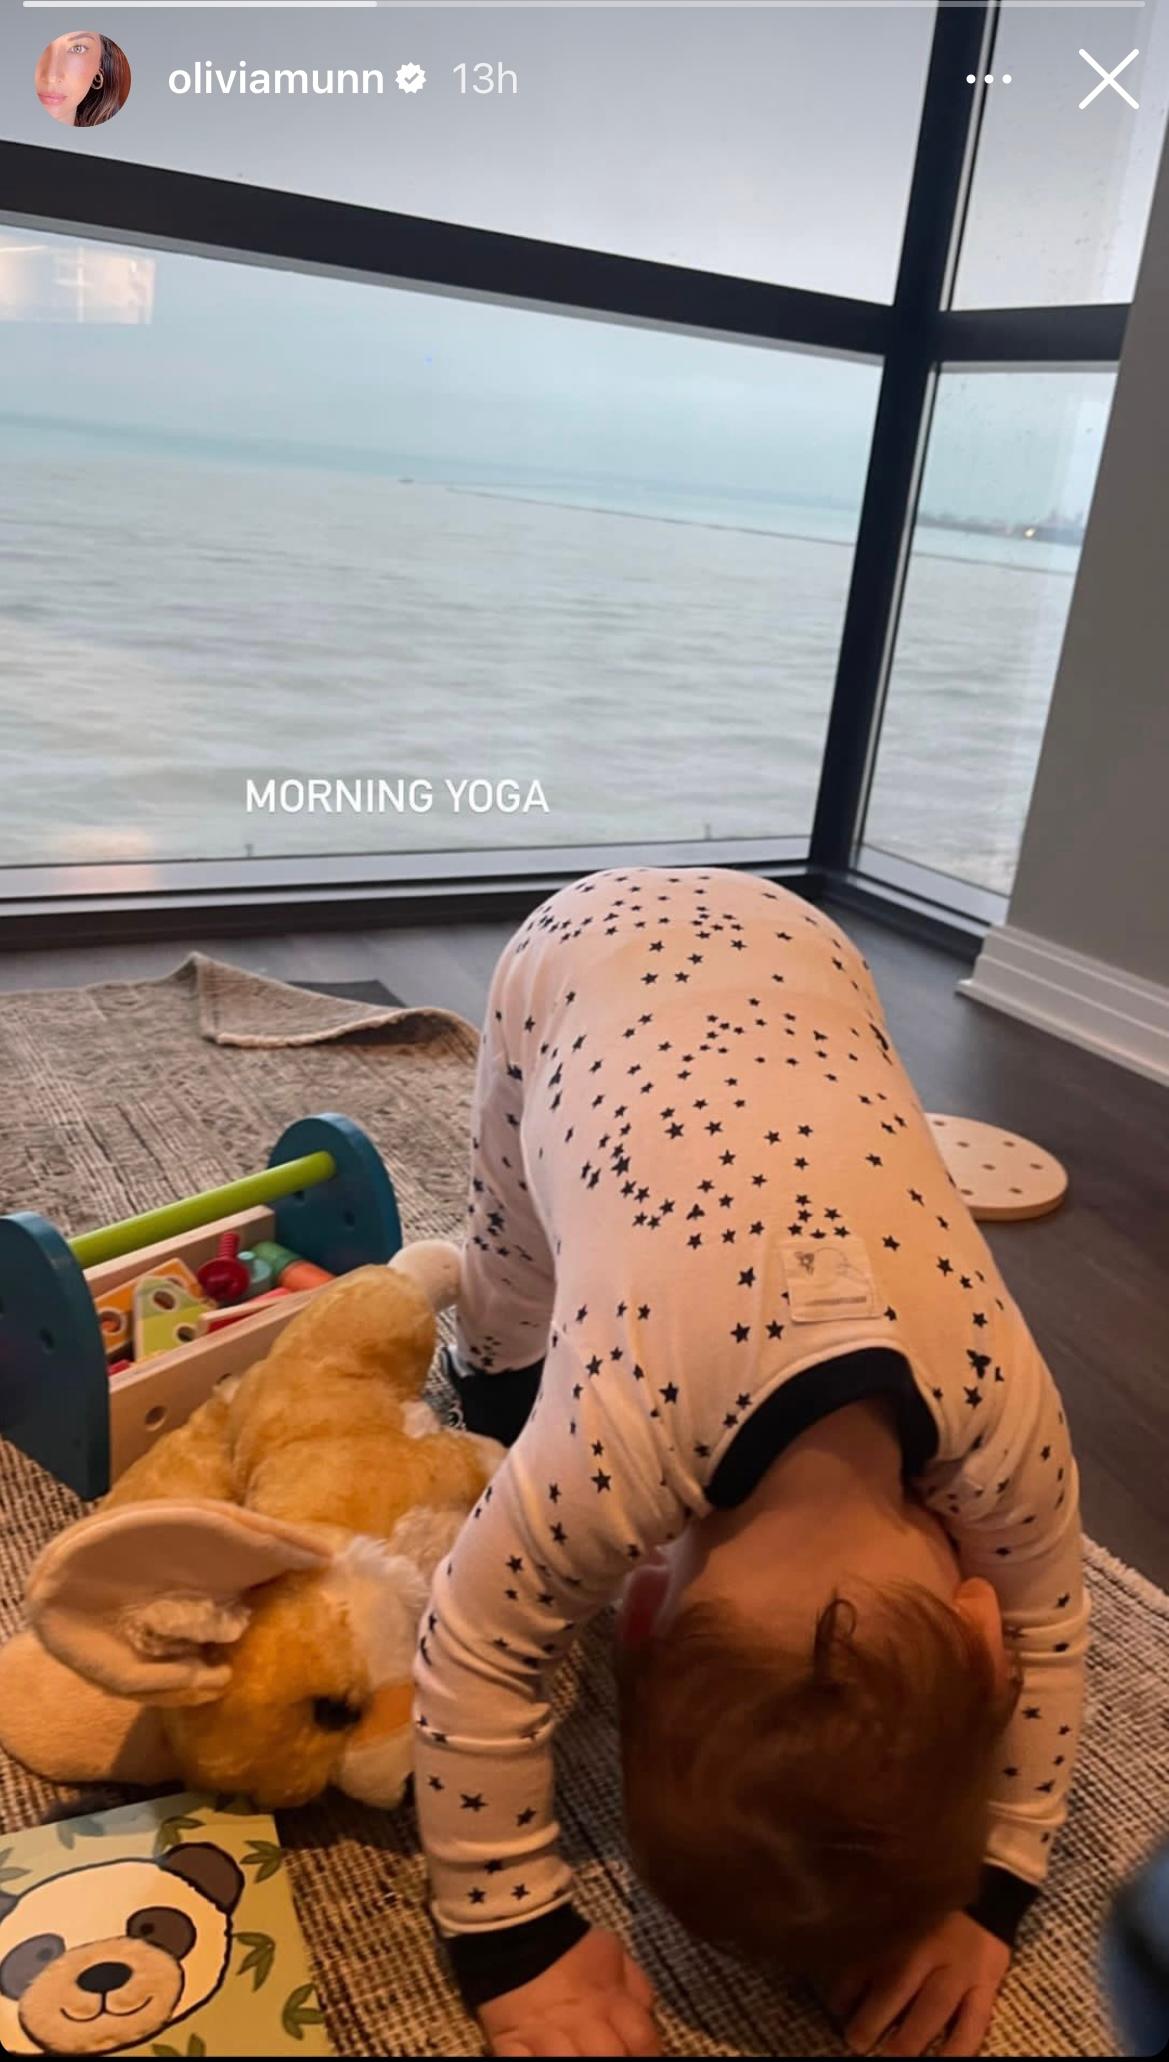 Olivia Munn's son flaunts yoga pose